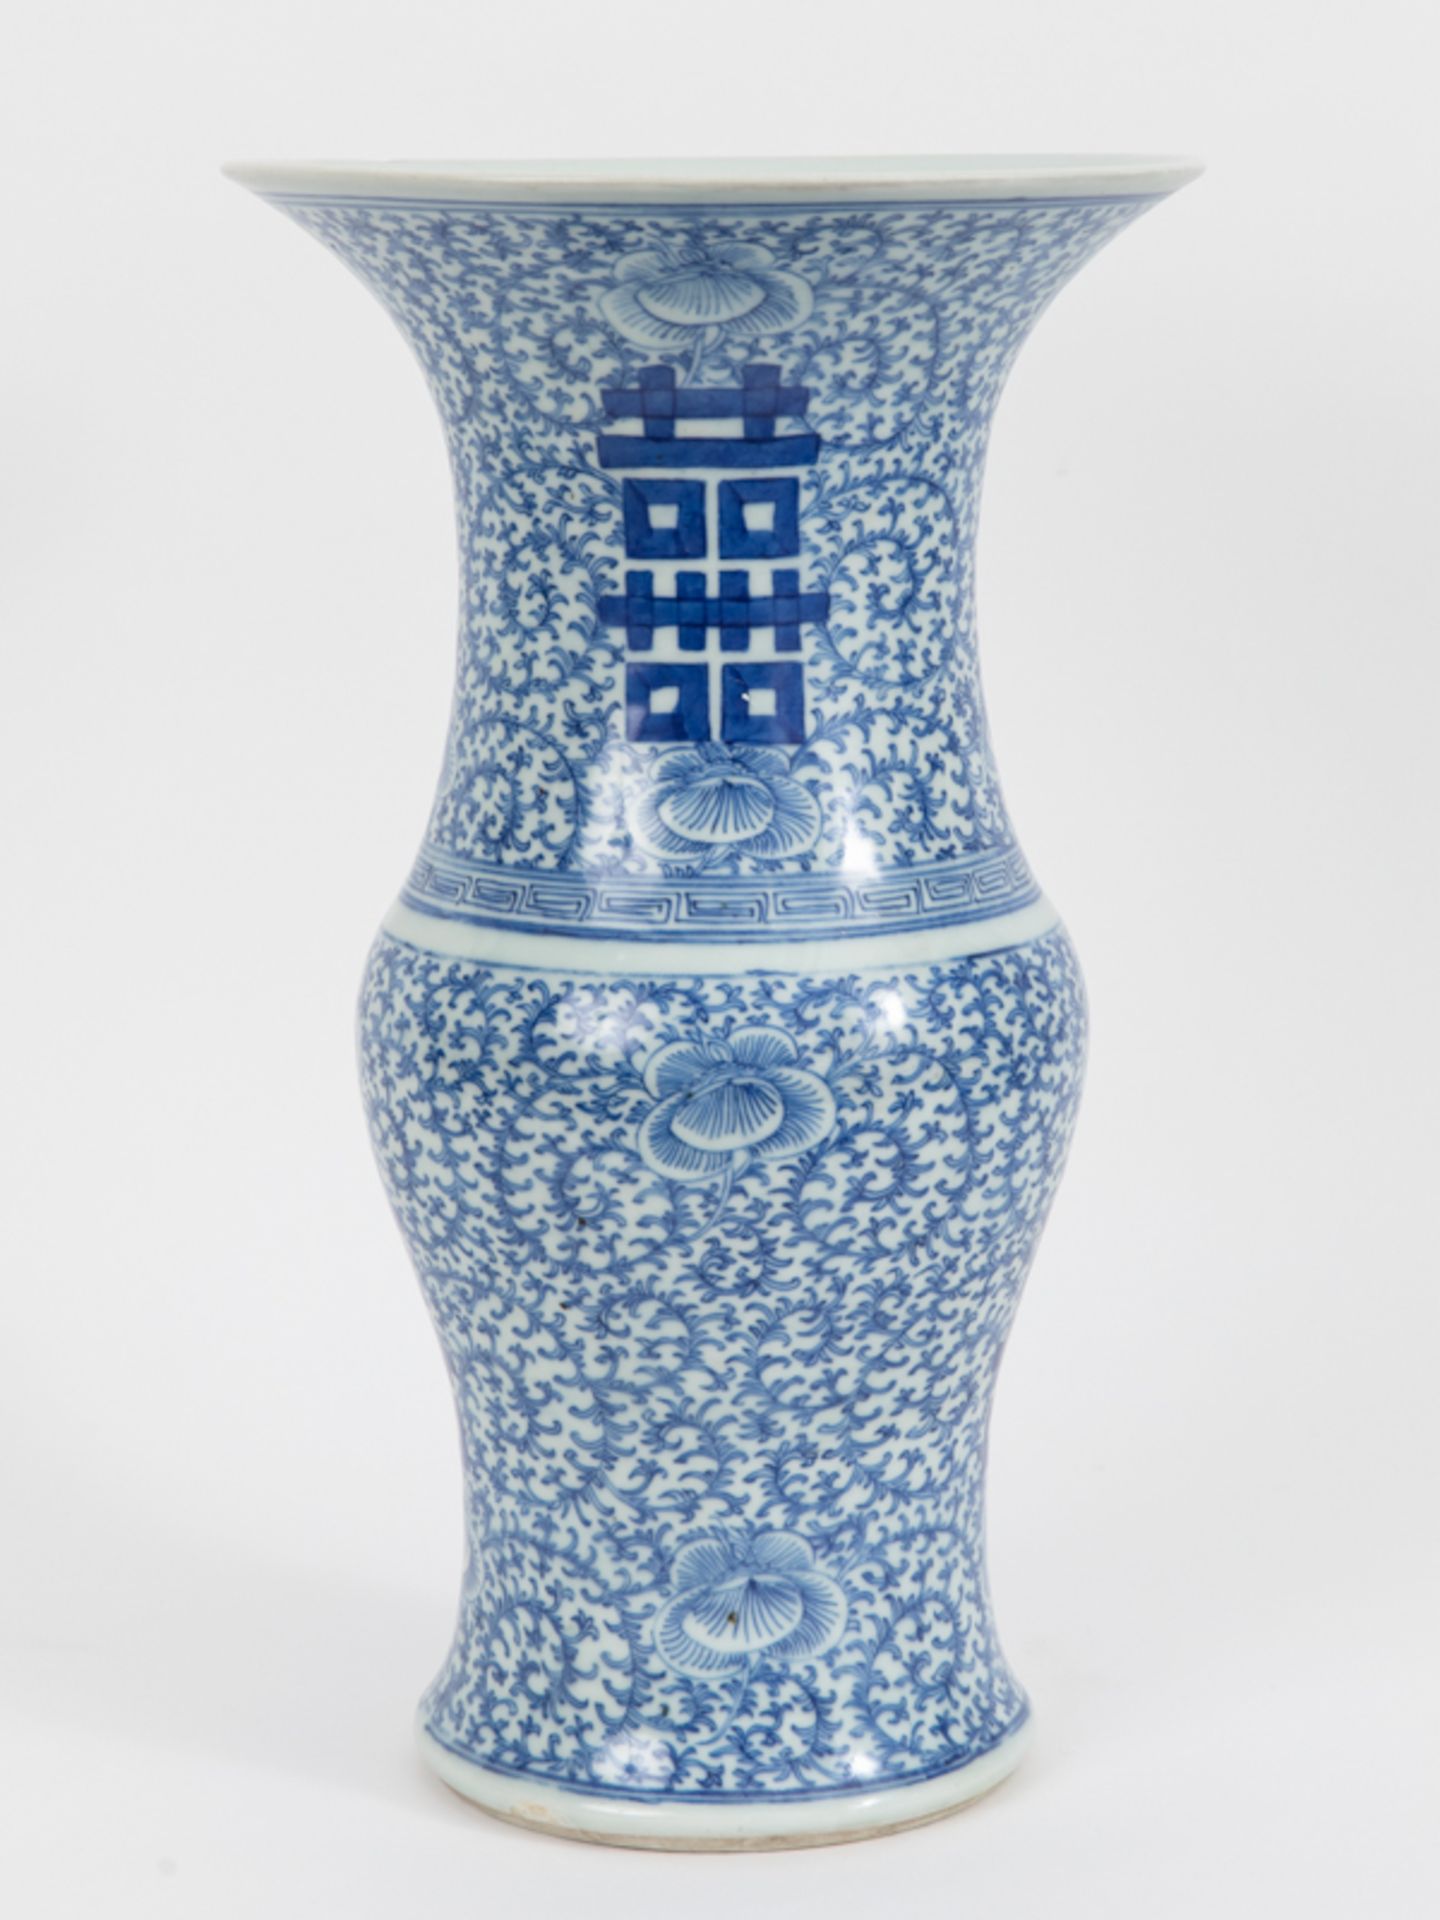 Balustervase mit GlÃ¼ckssymbolik, China, Qing-Dynastie, 18./19. Jh. brPorzellan mit unter Glasur - Image 2 of 5